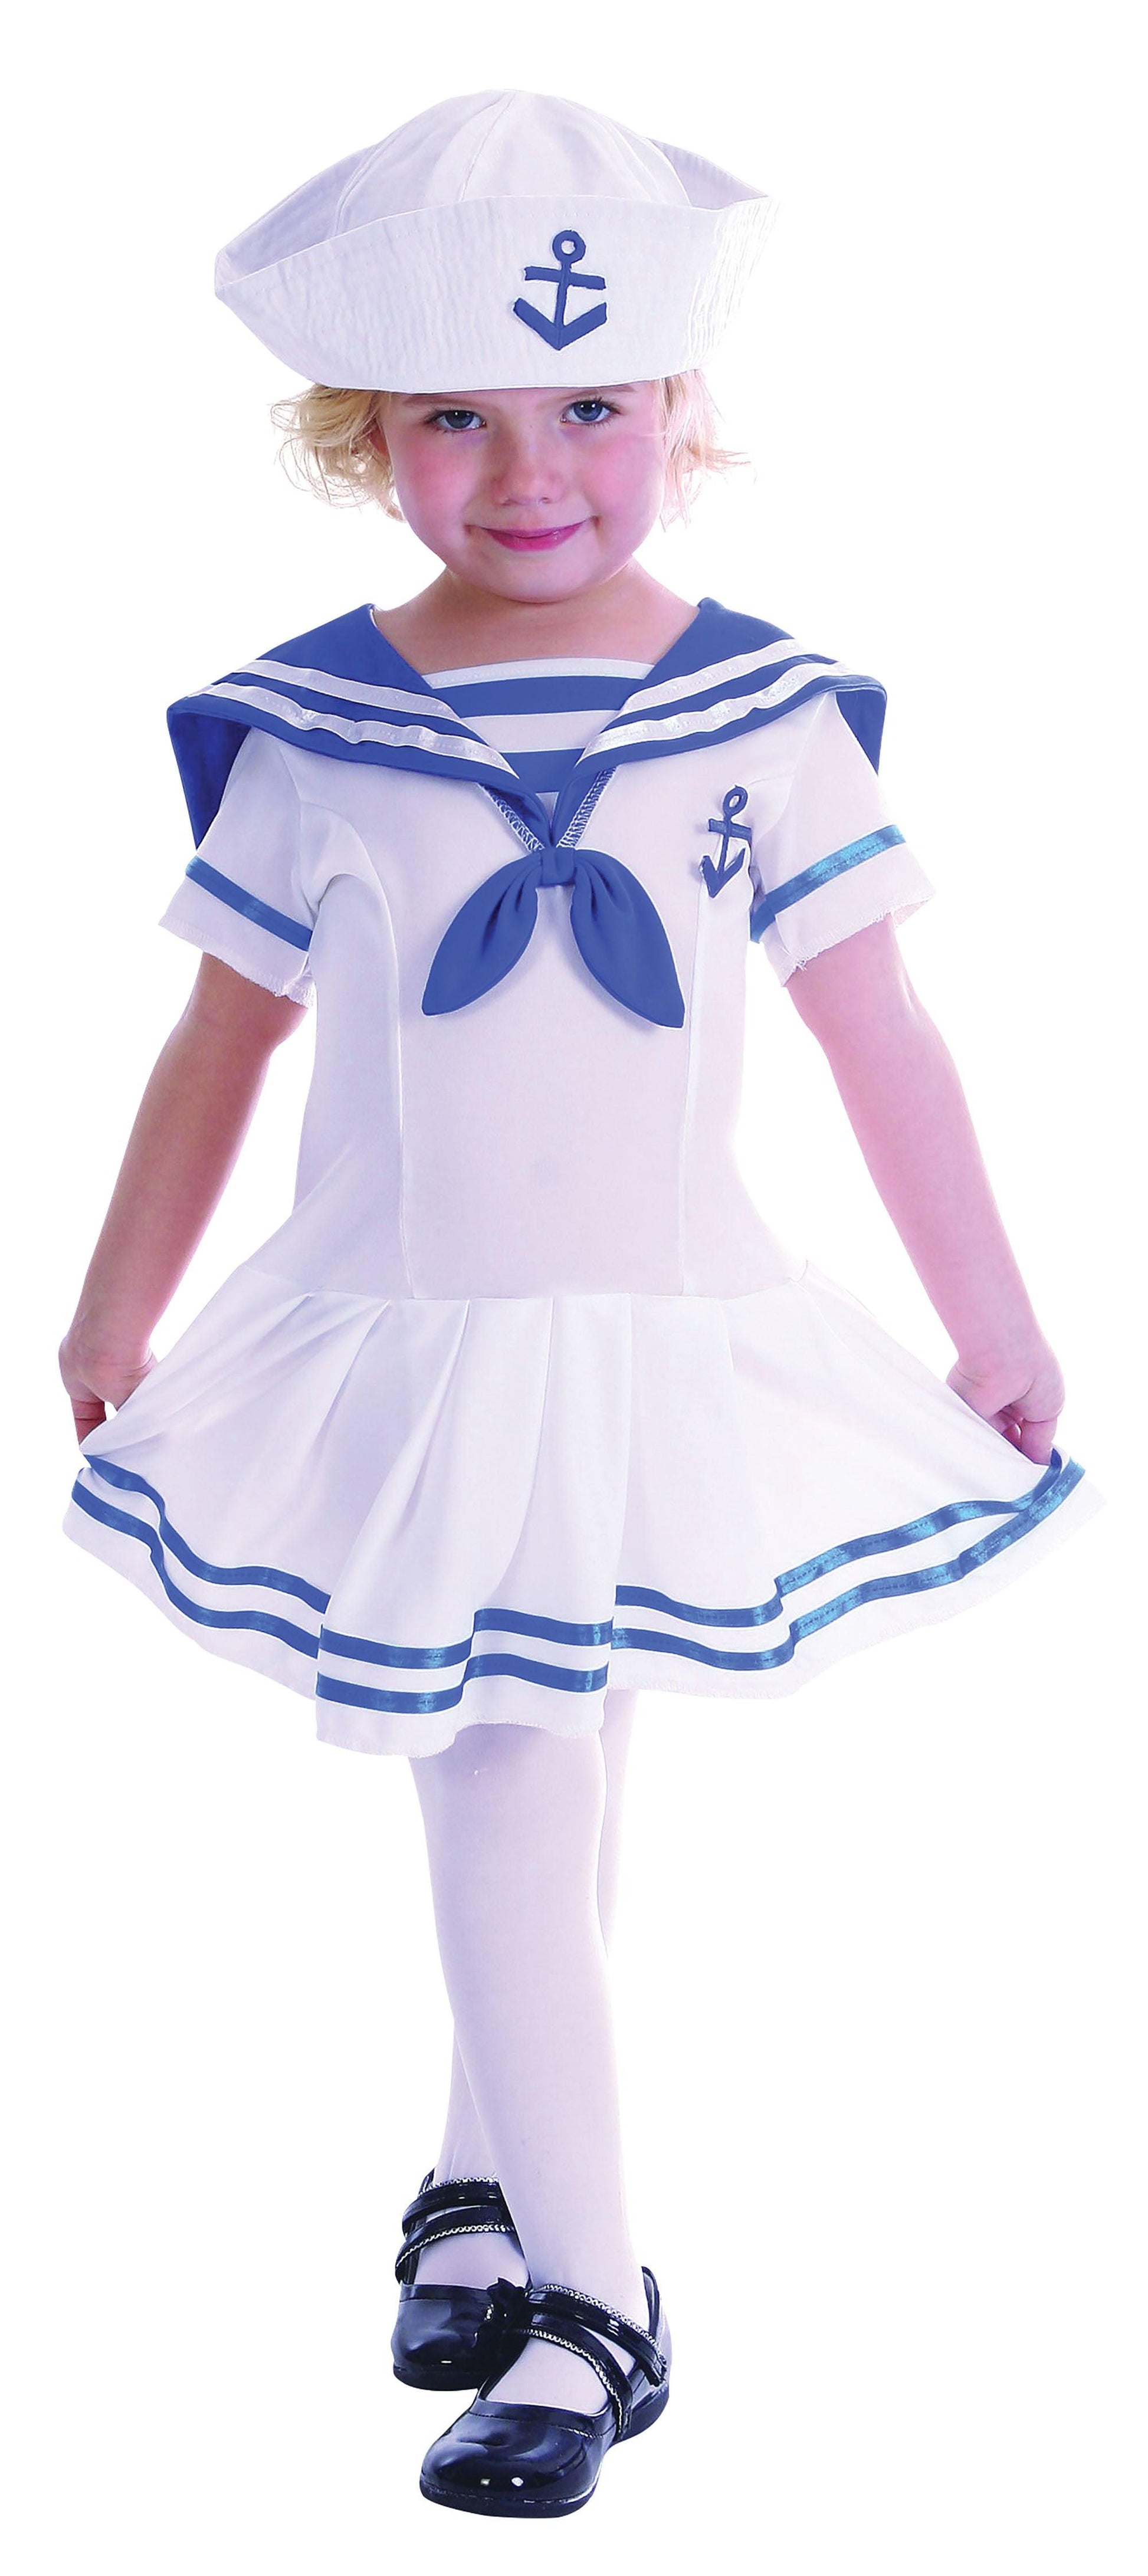 Sailor Girl - Labreeze